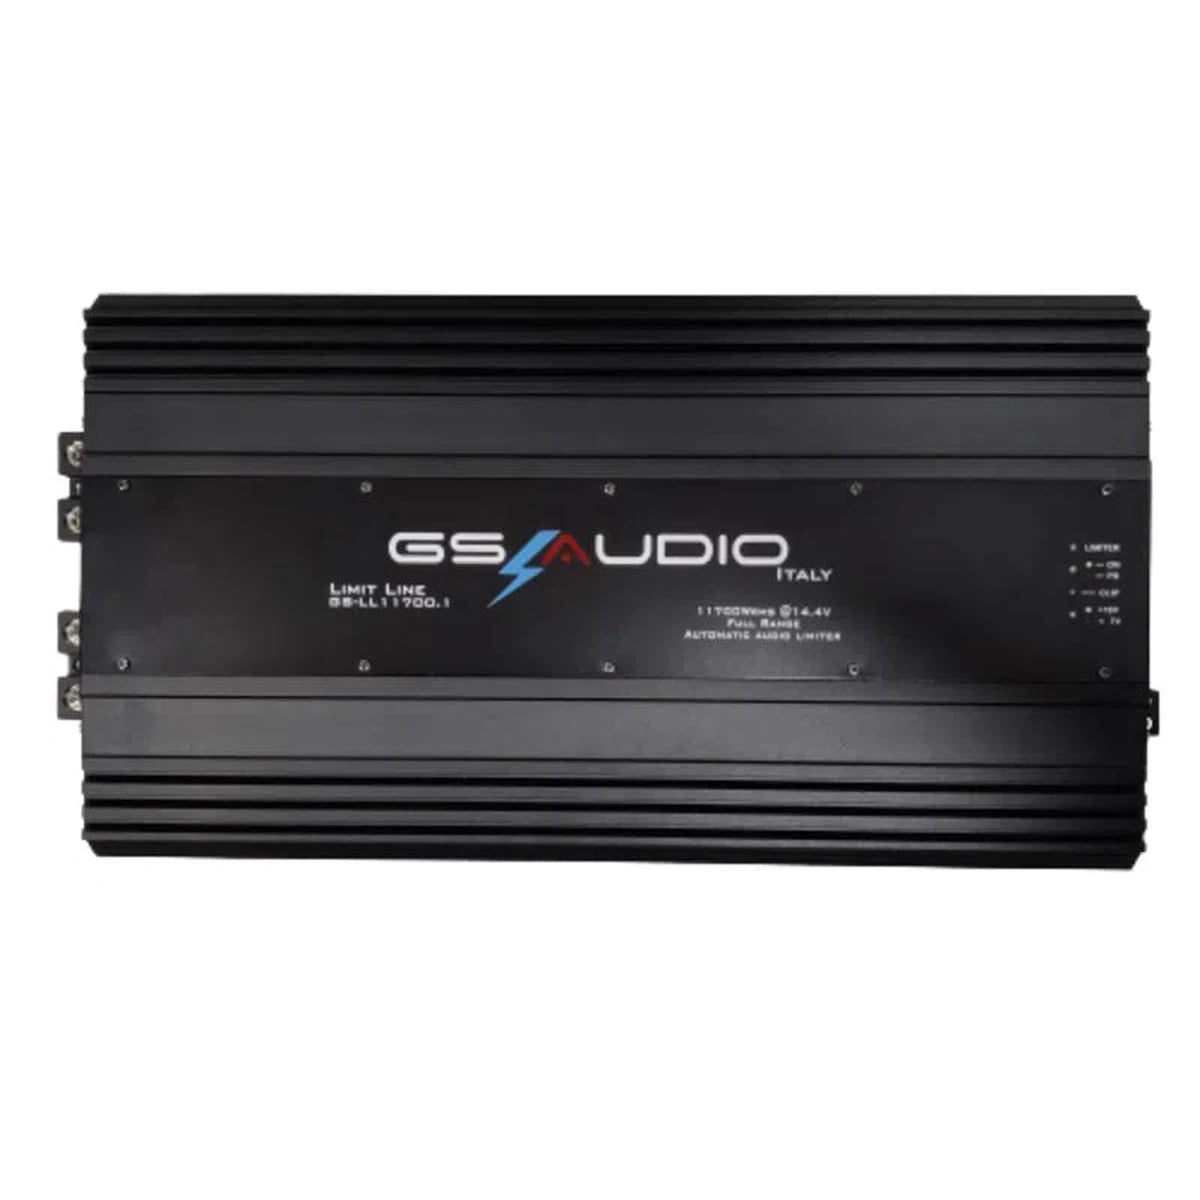 Amplificador GS Audio-Limit Line GS-11700.1-1-canal-Masori.de